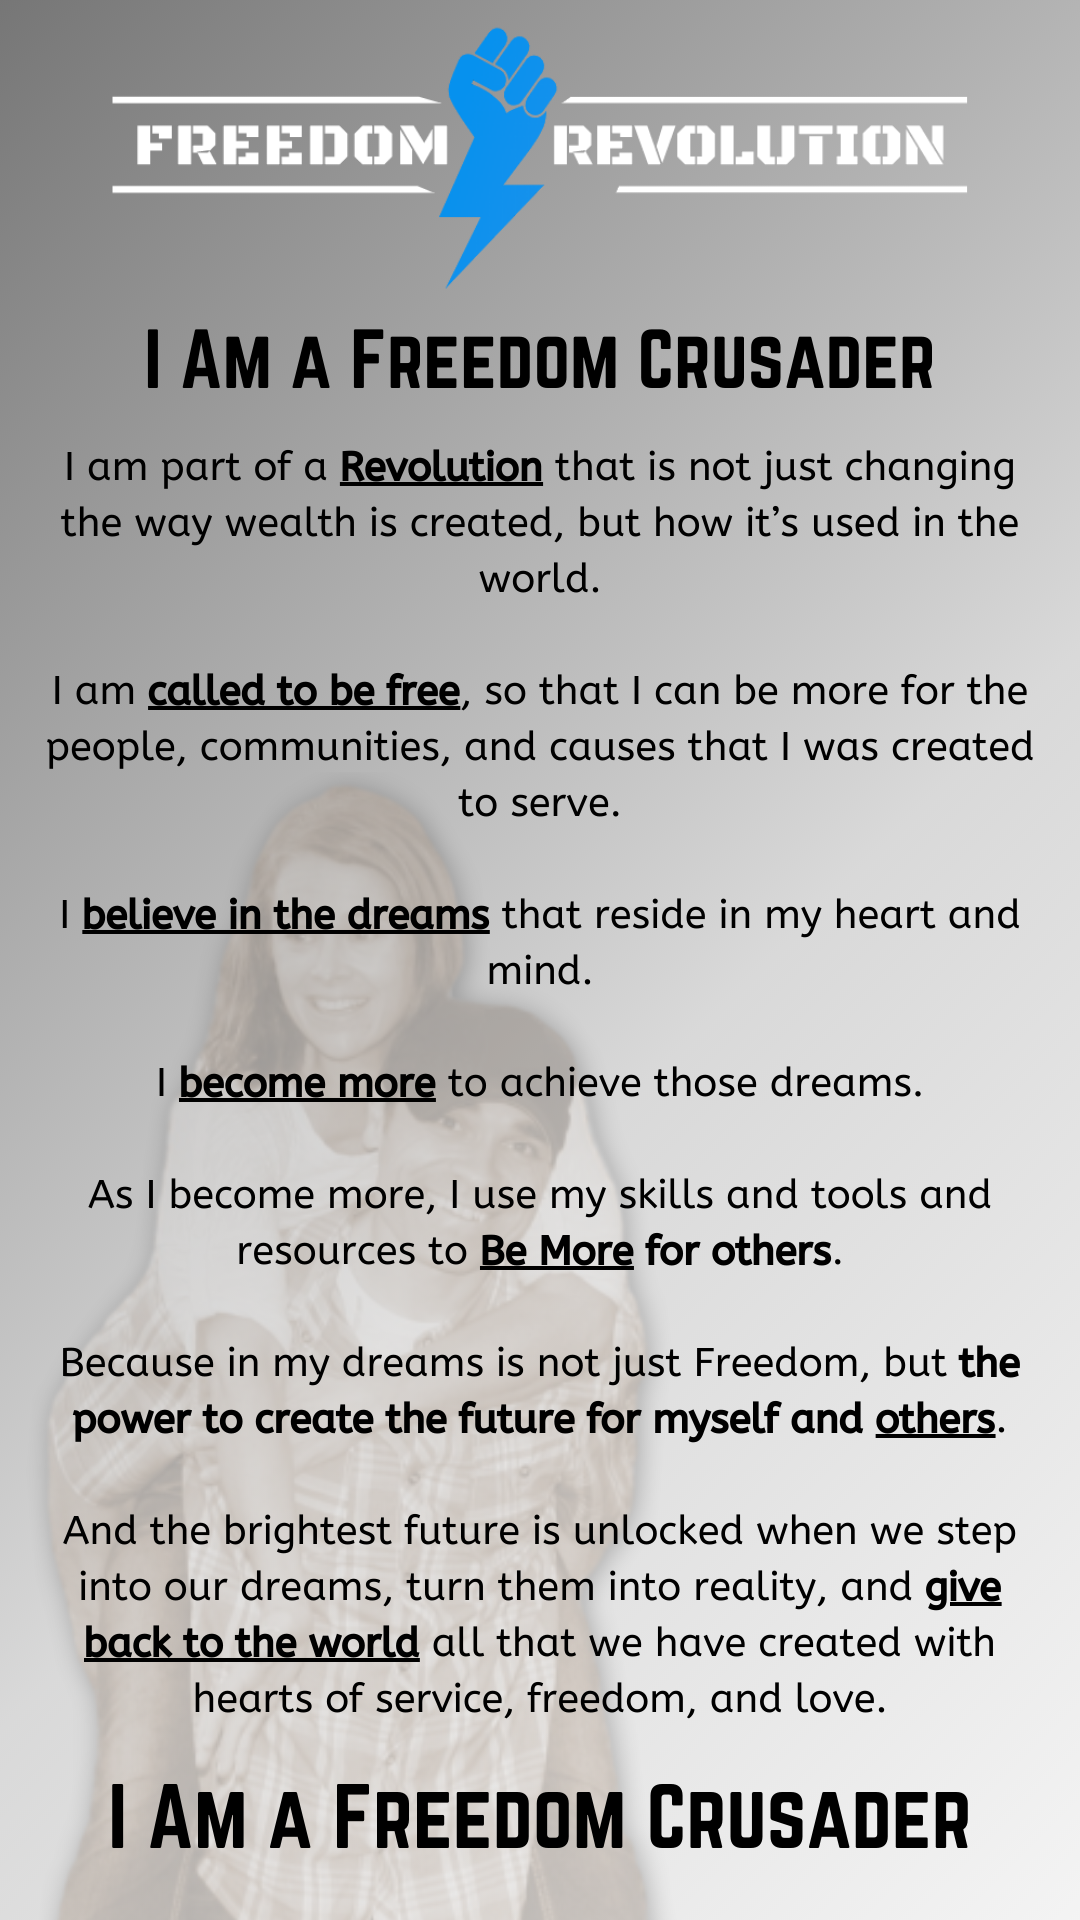 Nick Bramble's Manifesto